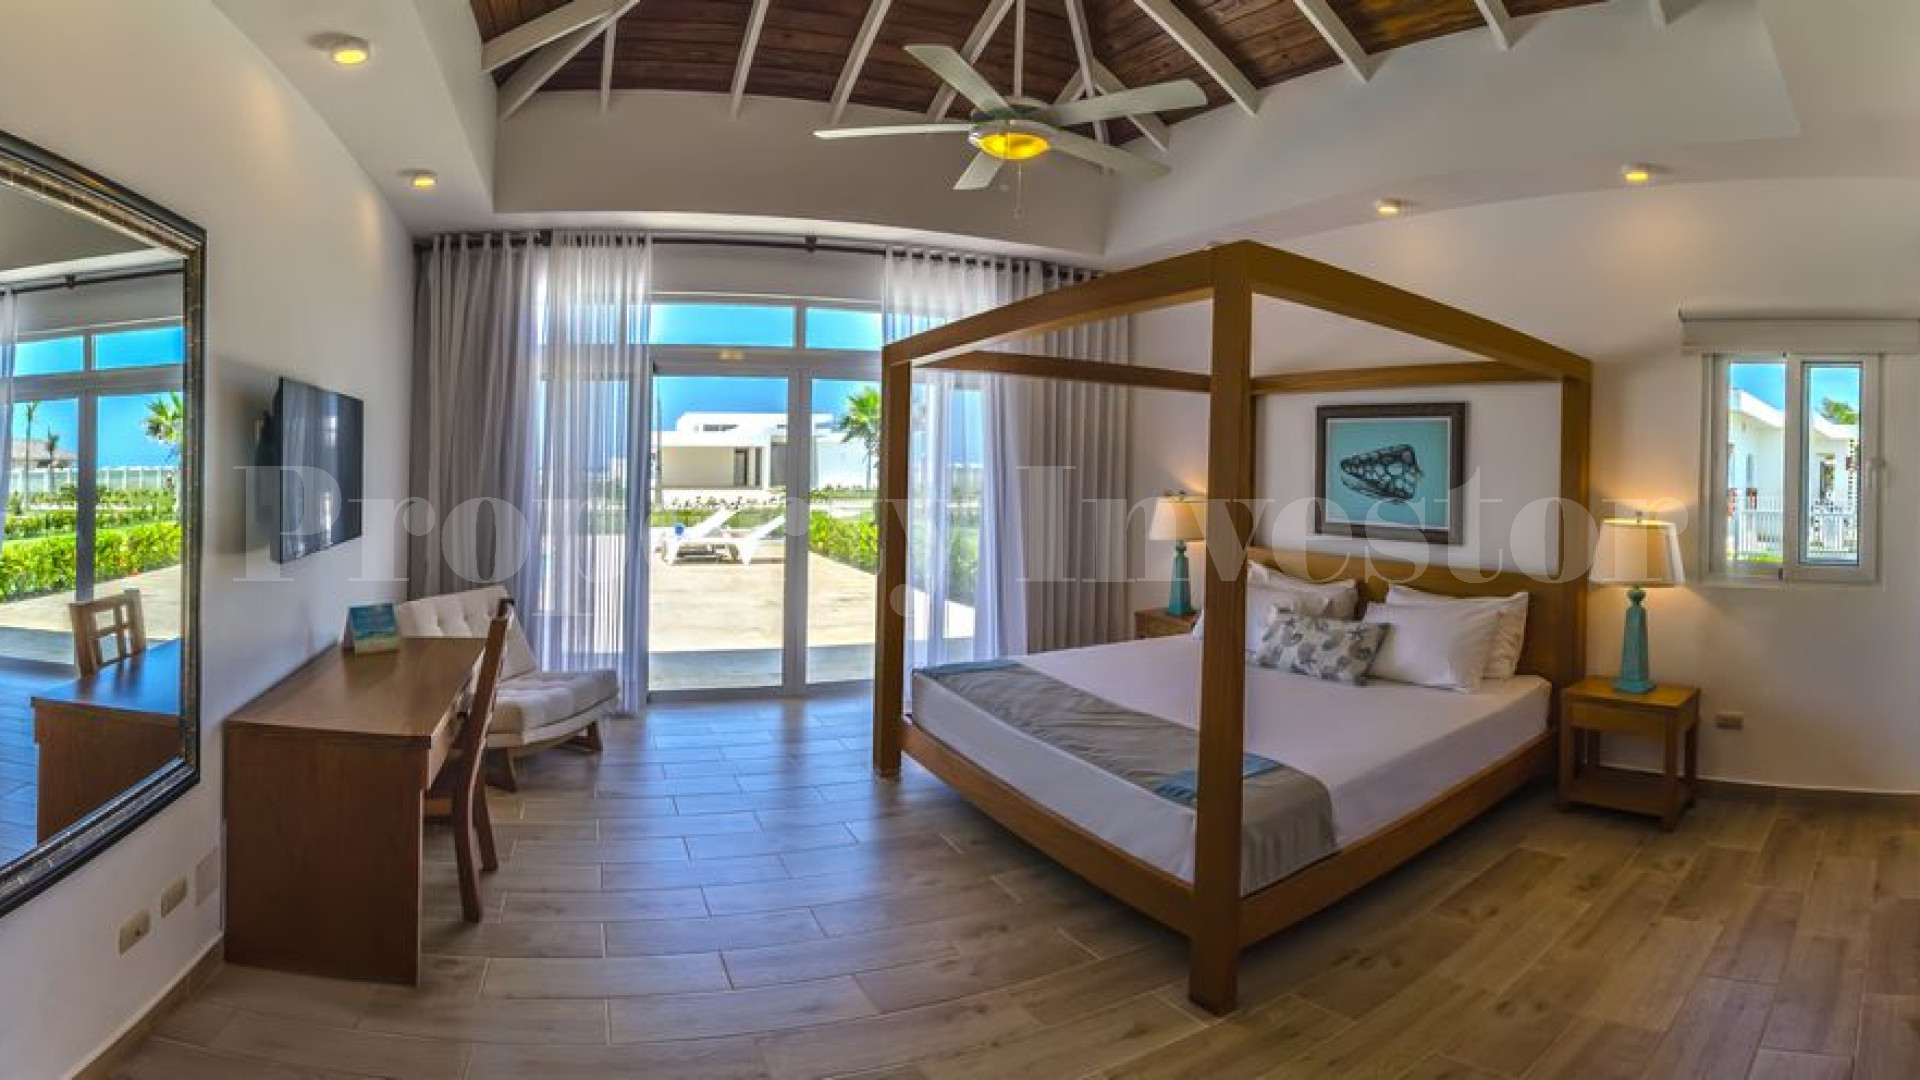 2 Bedroom Oceanview Villa in the Dominican Republic with 30 Year Financing (Villa 23)